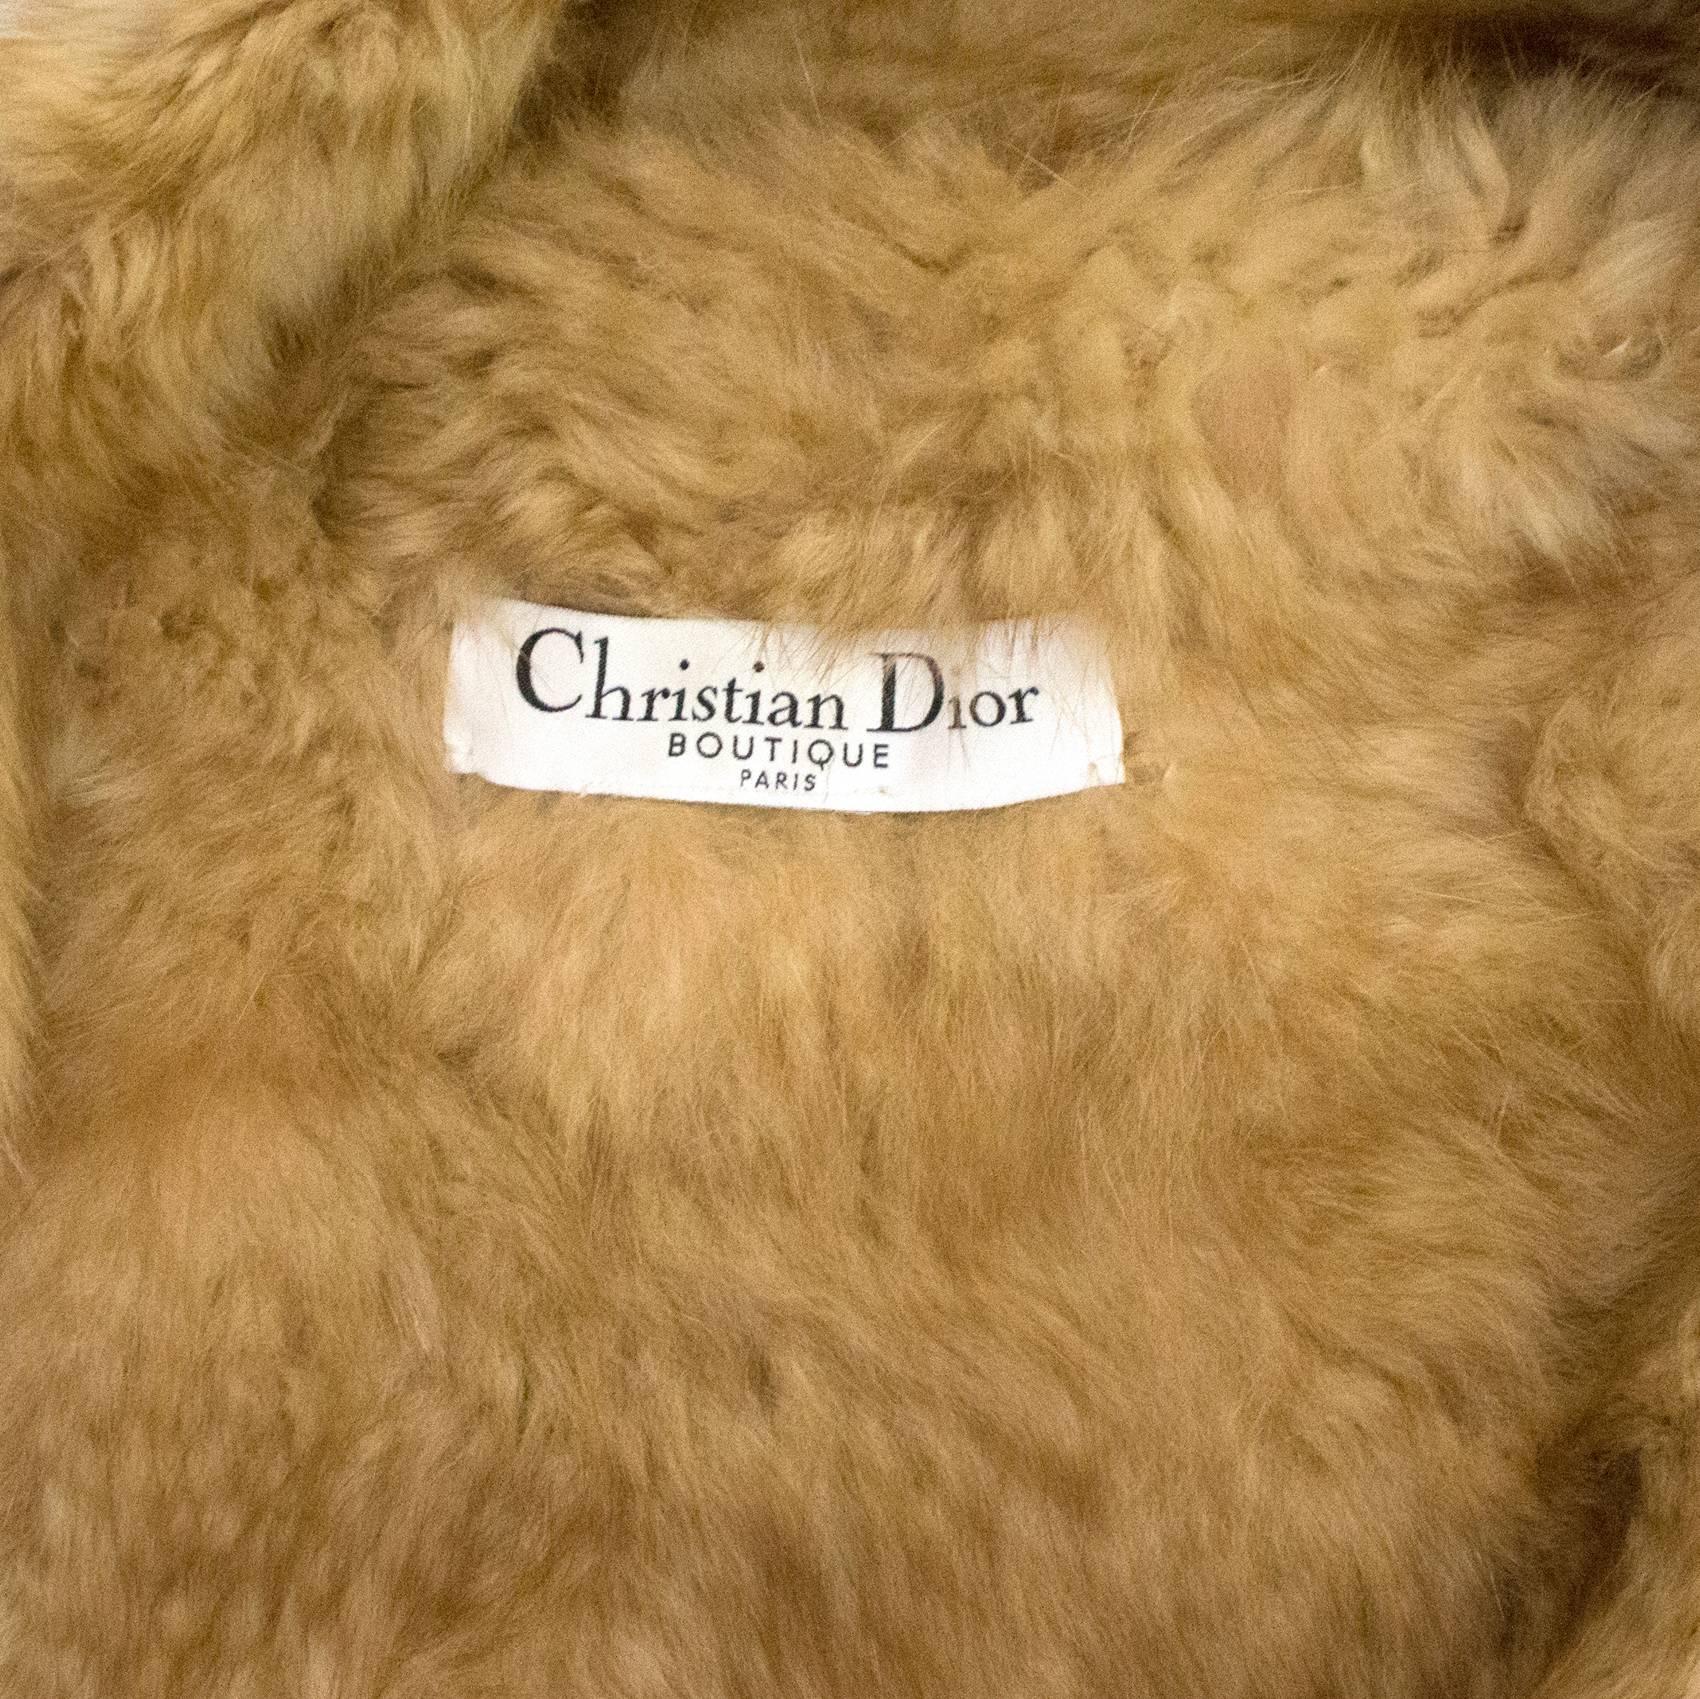 Christian Dior Rare Russian Sable Fur Coat 2